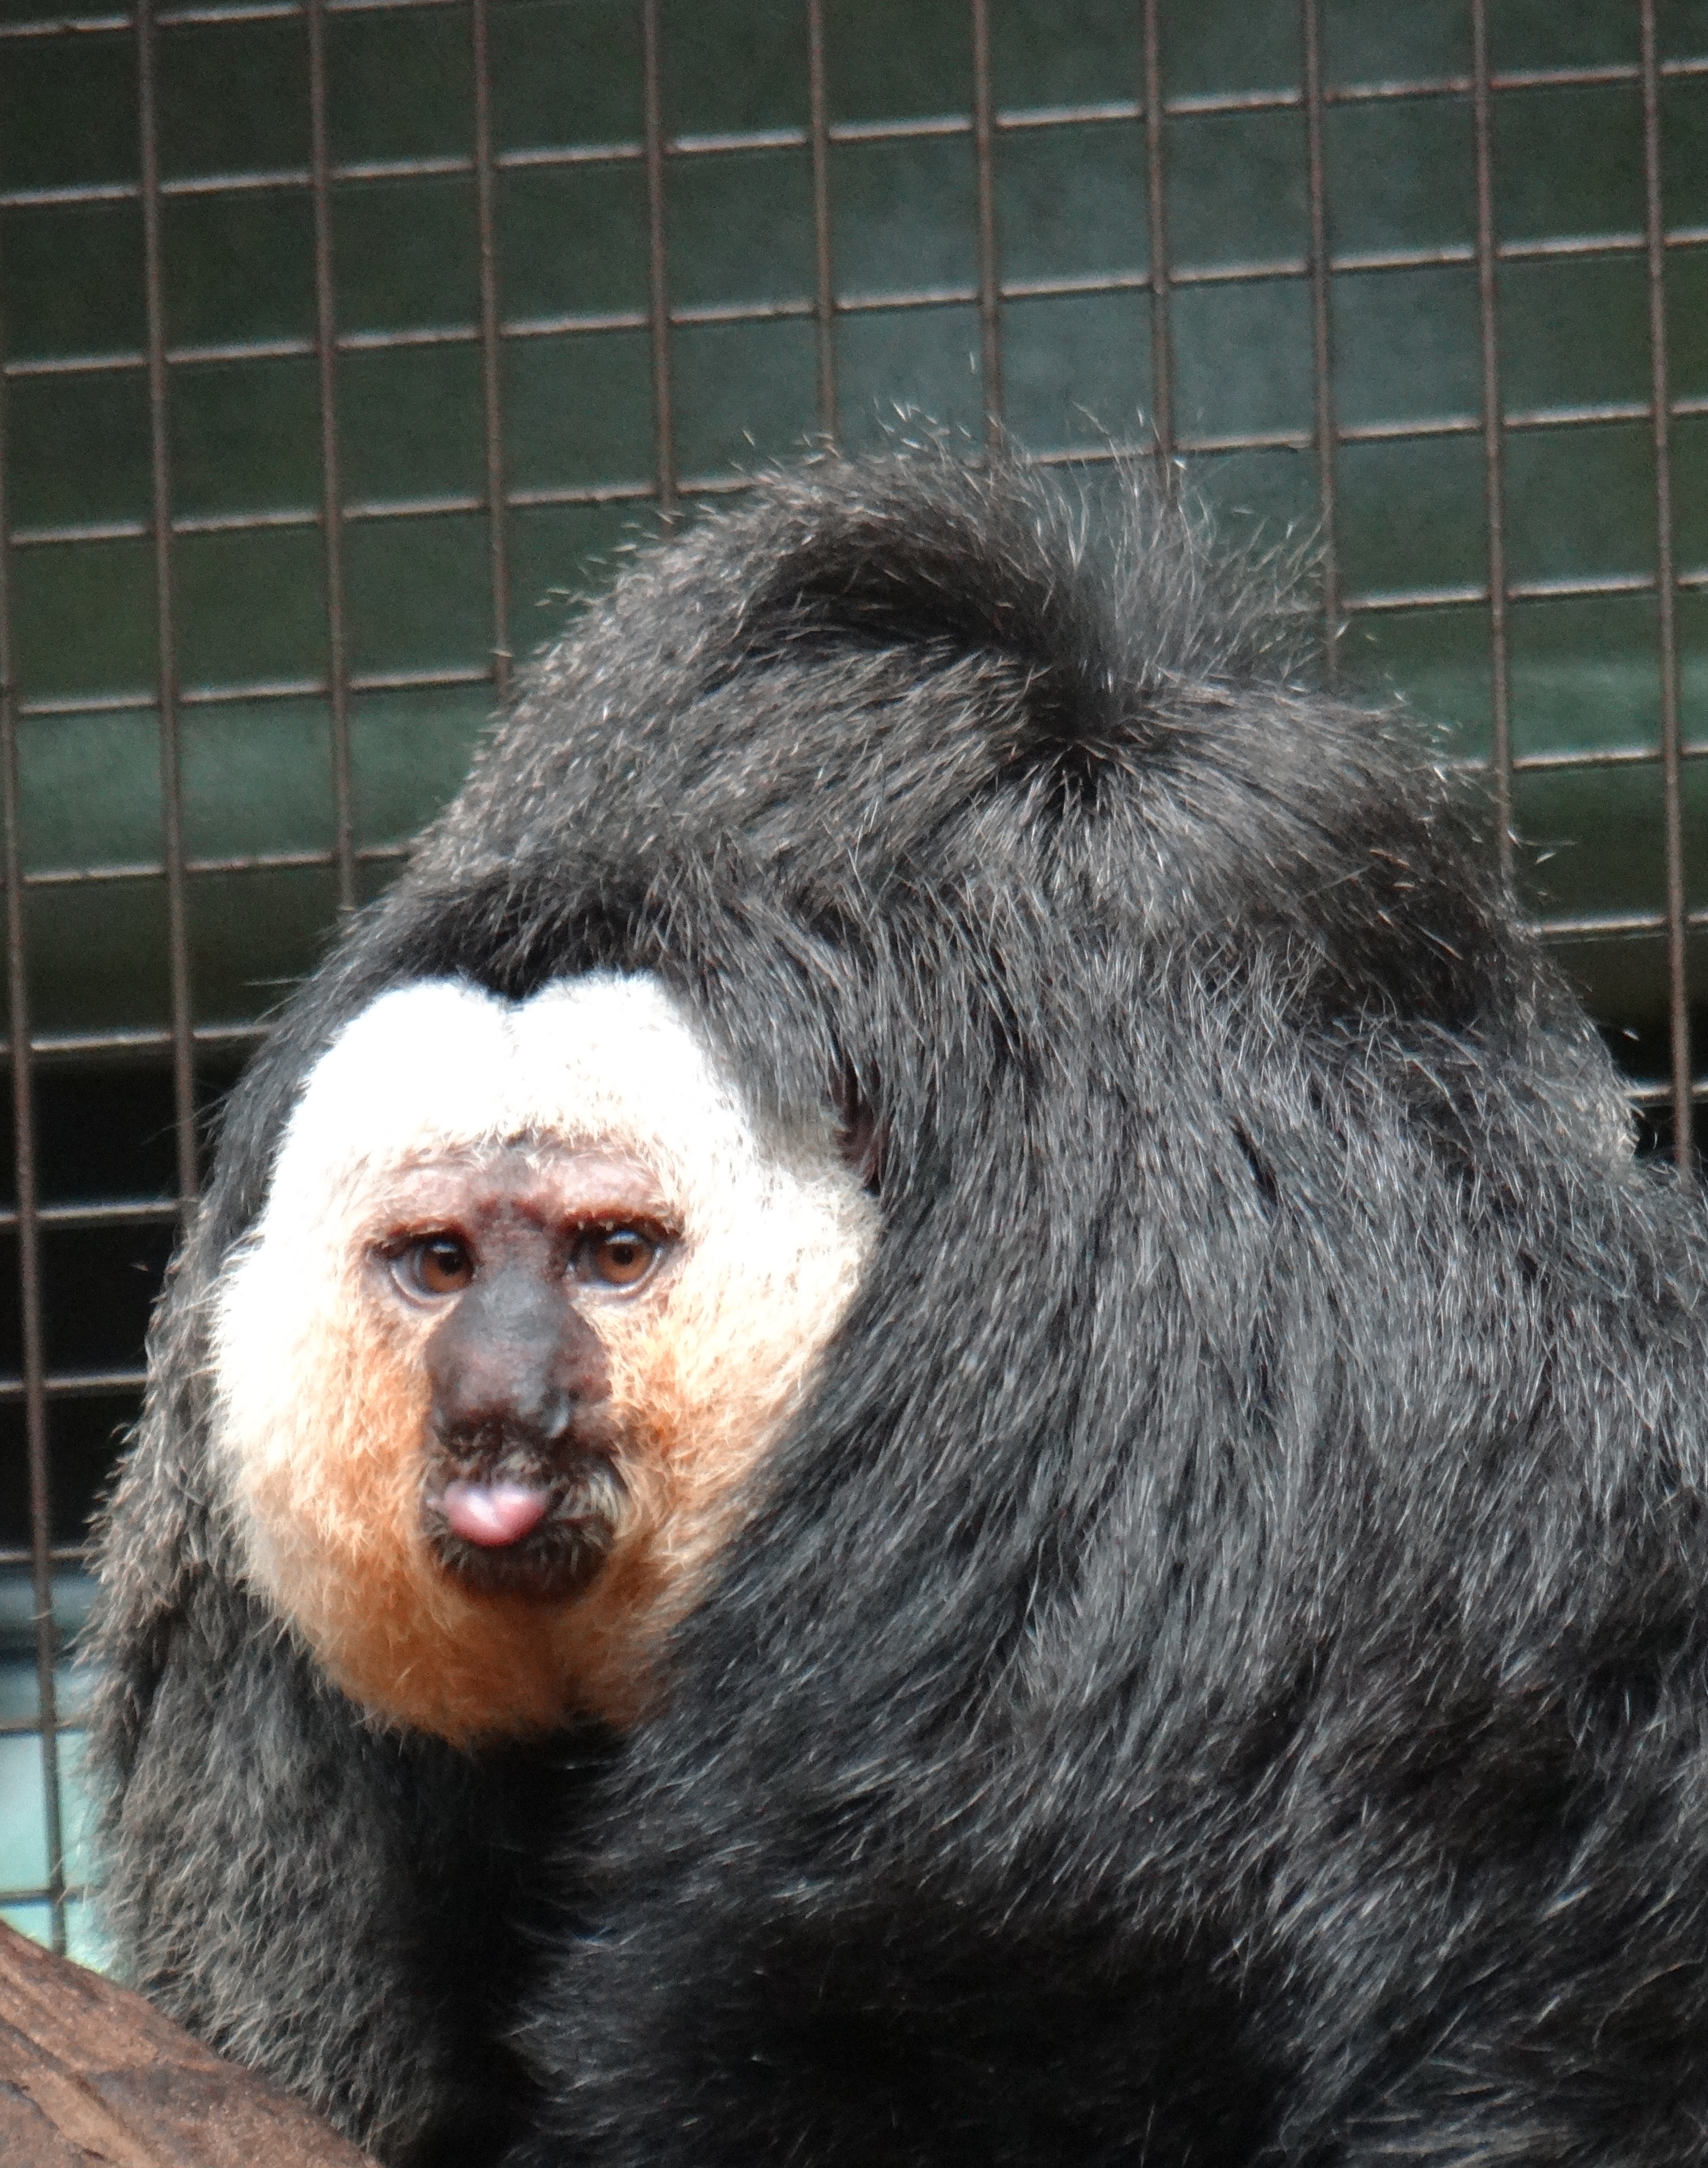 White-faced Saki Monkey at Beardsley Zoo